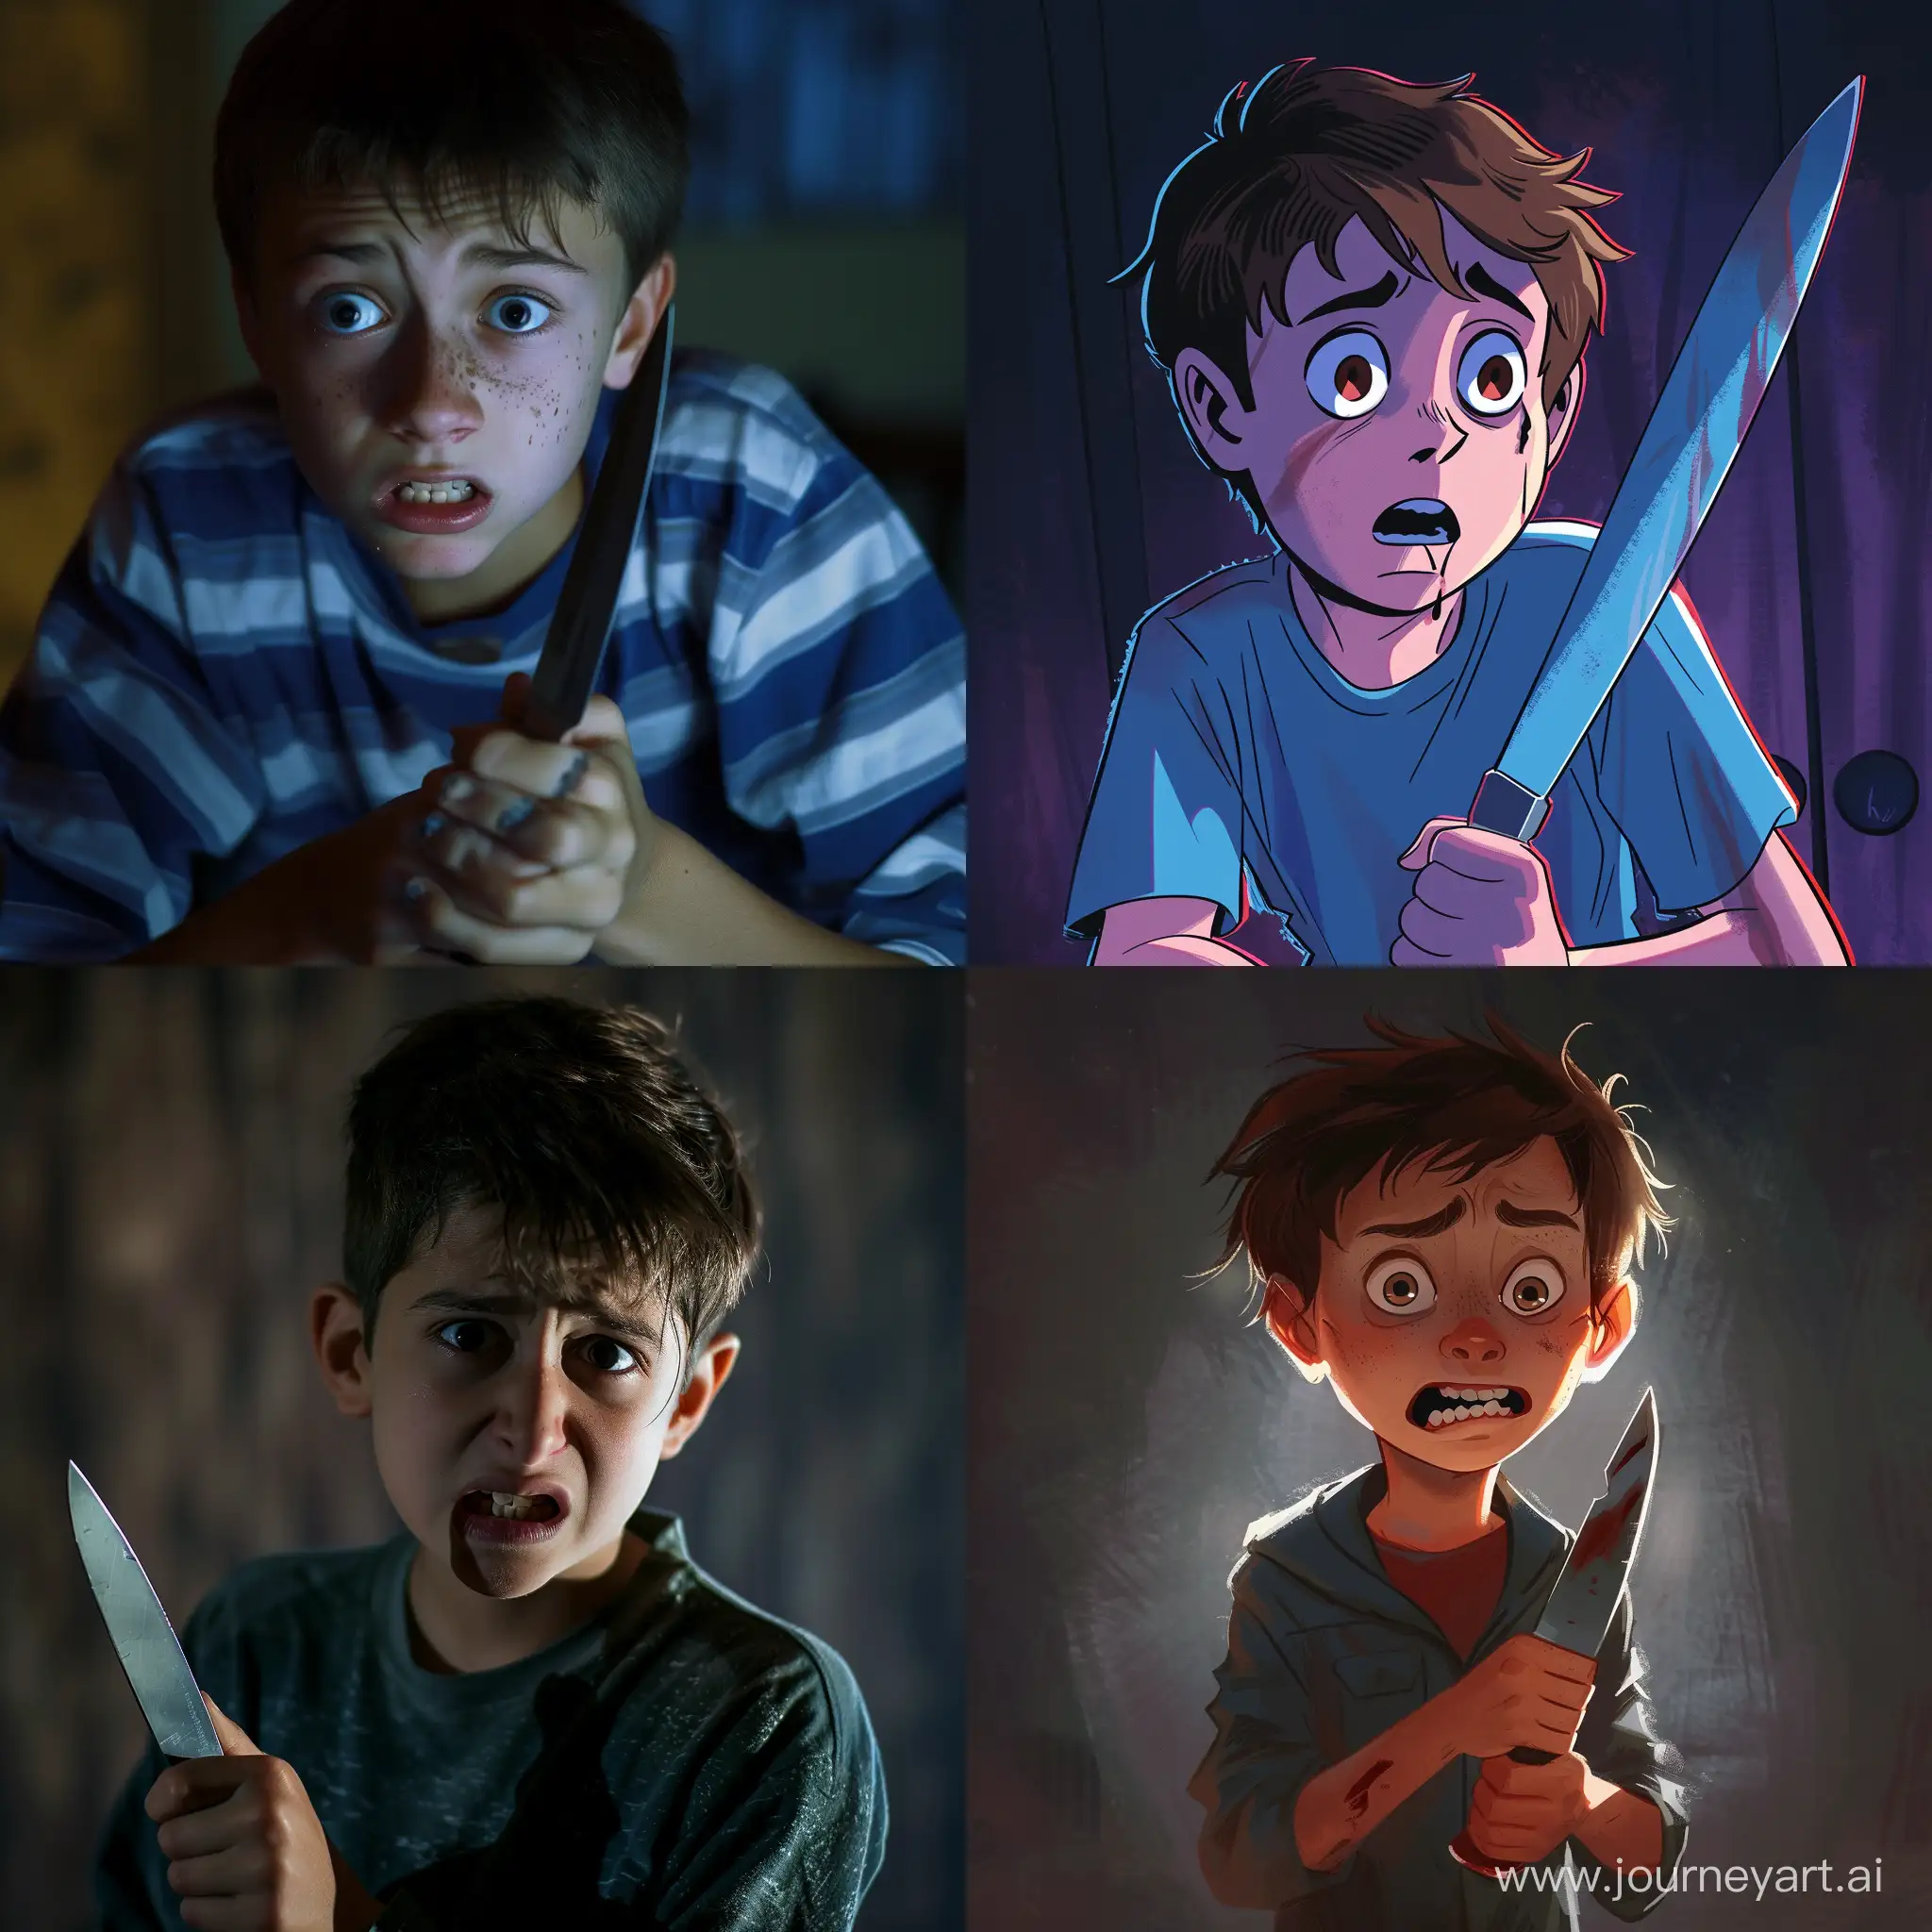 a teenag boy, holding a knife, looking scared
